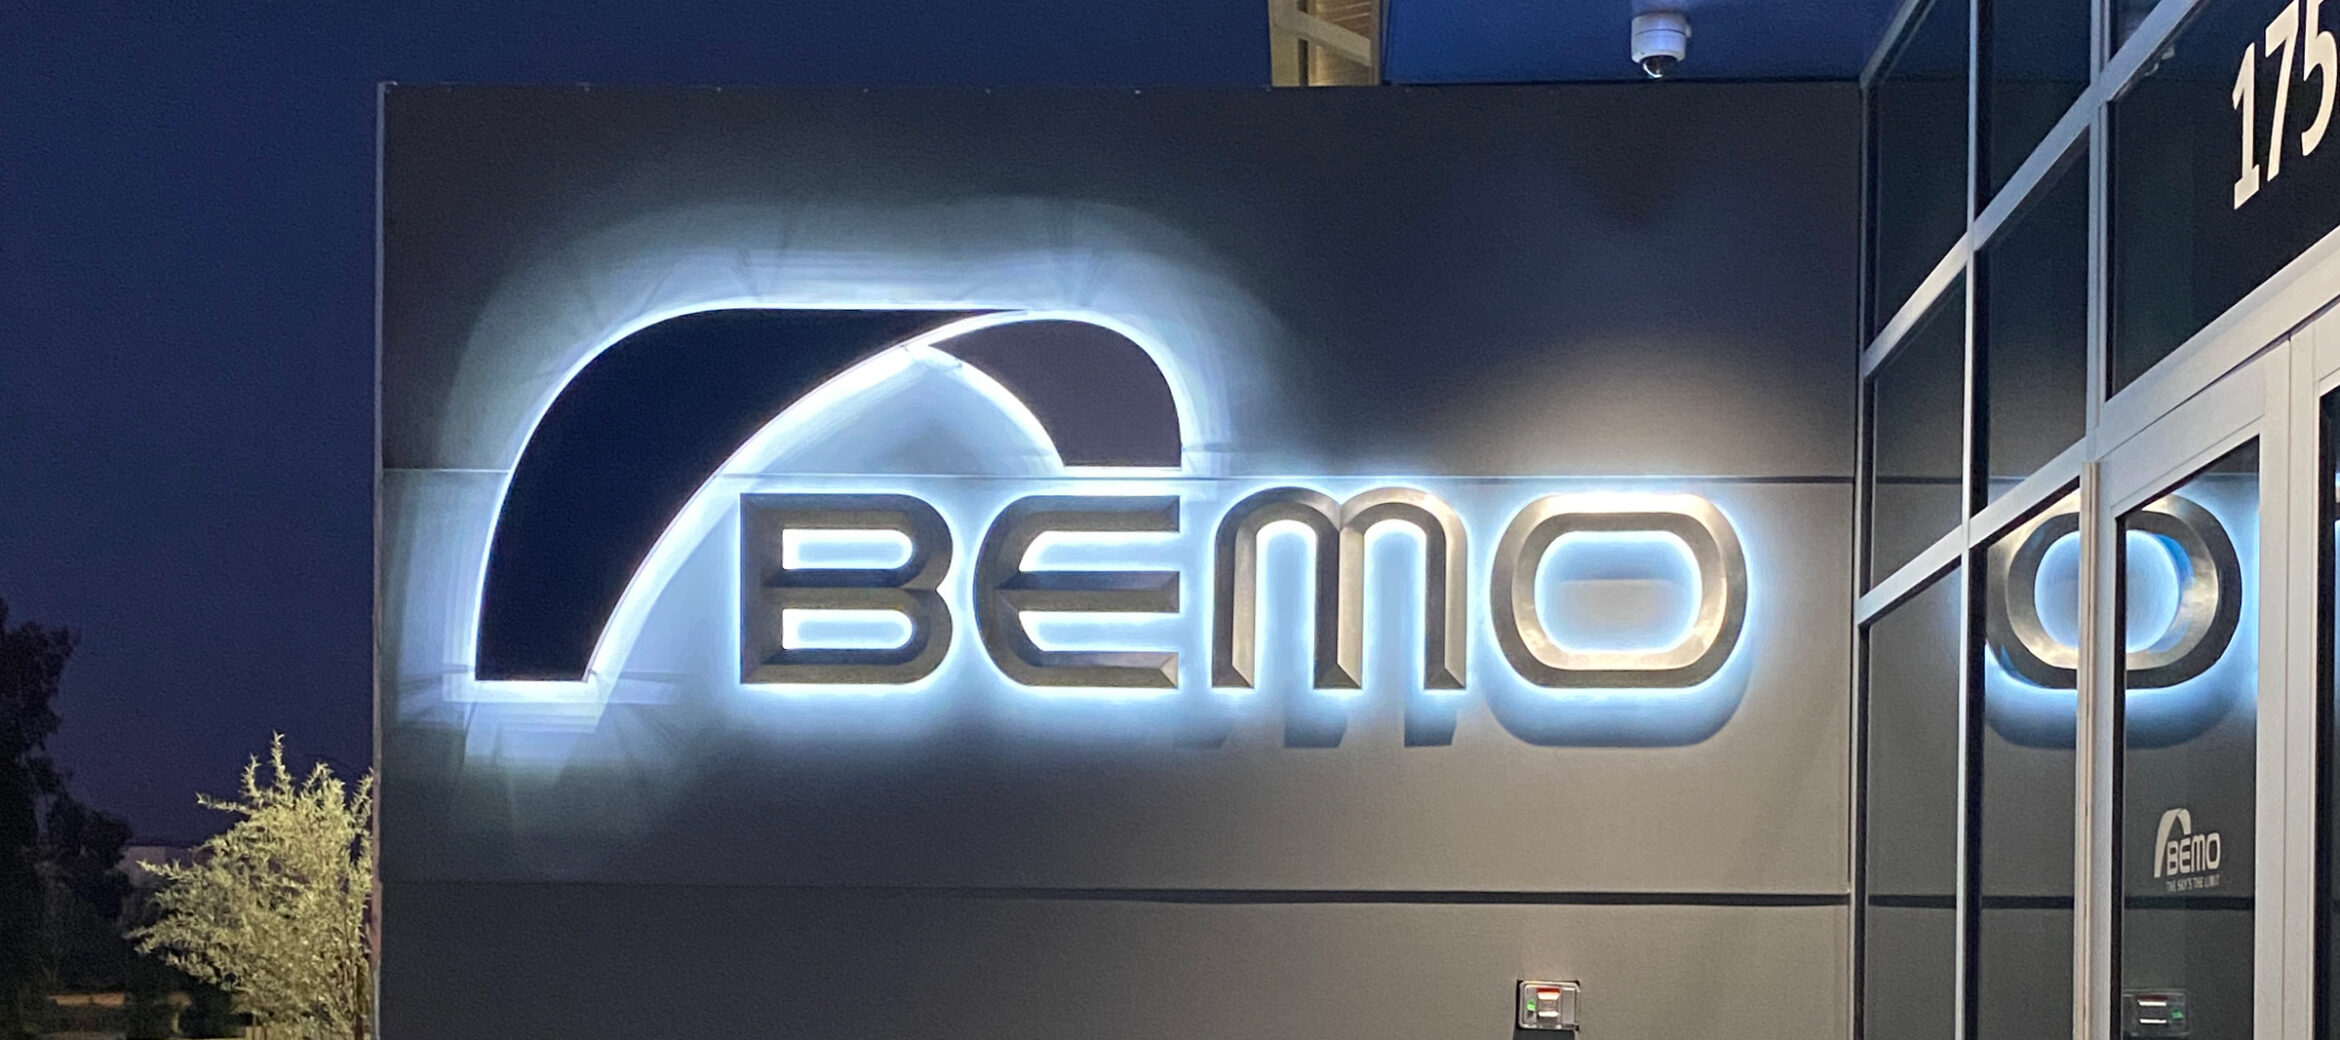 Bemo dealership cast aluminum halo lit letters